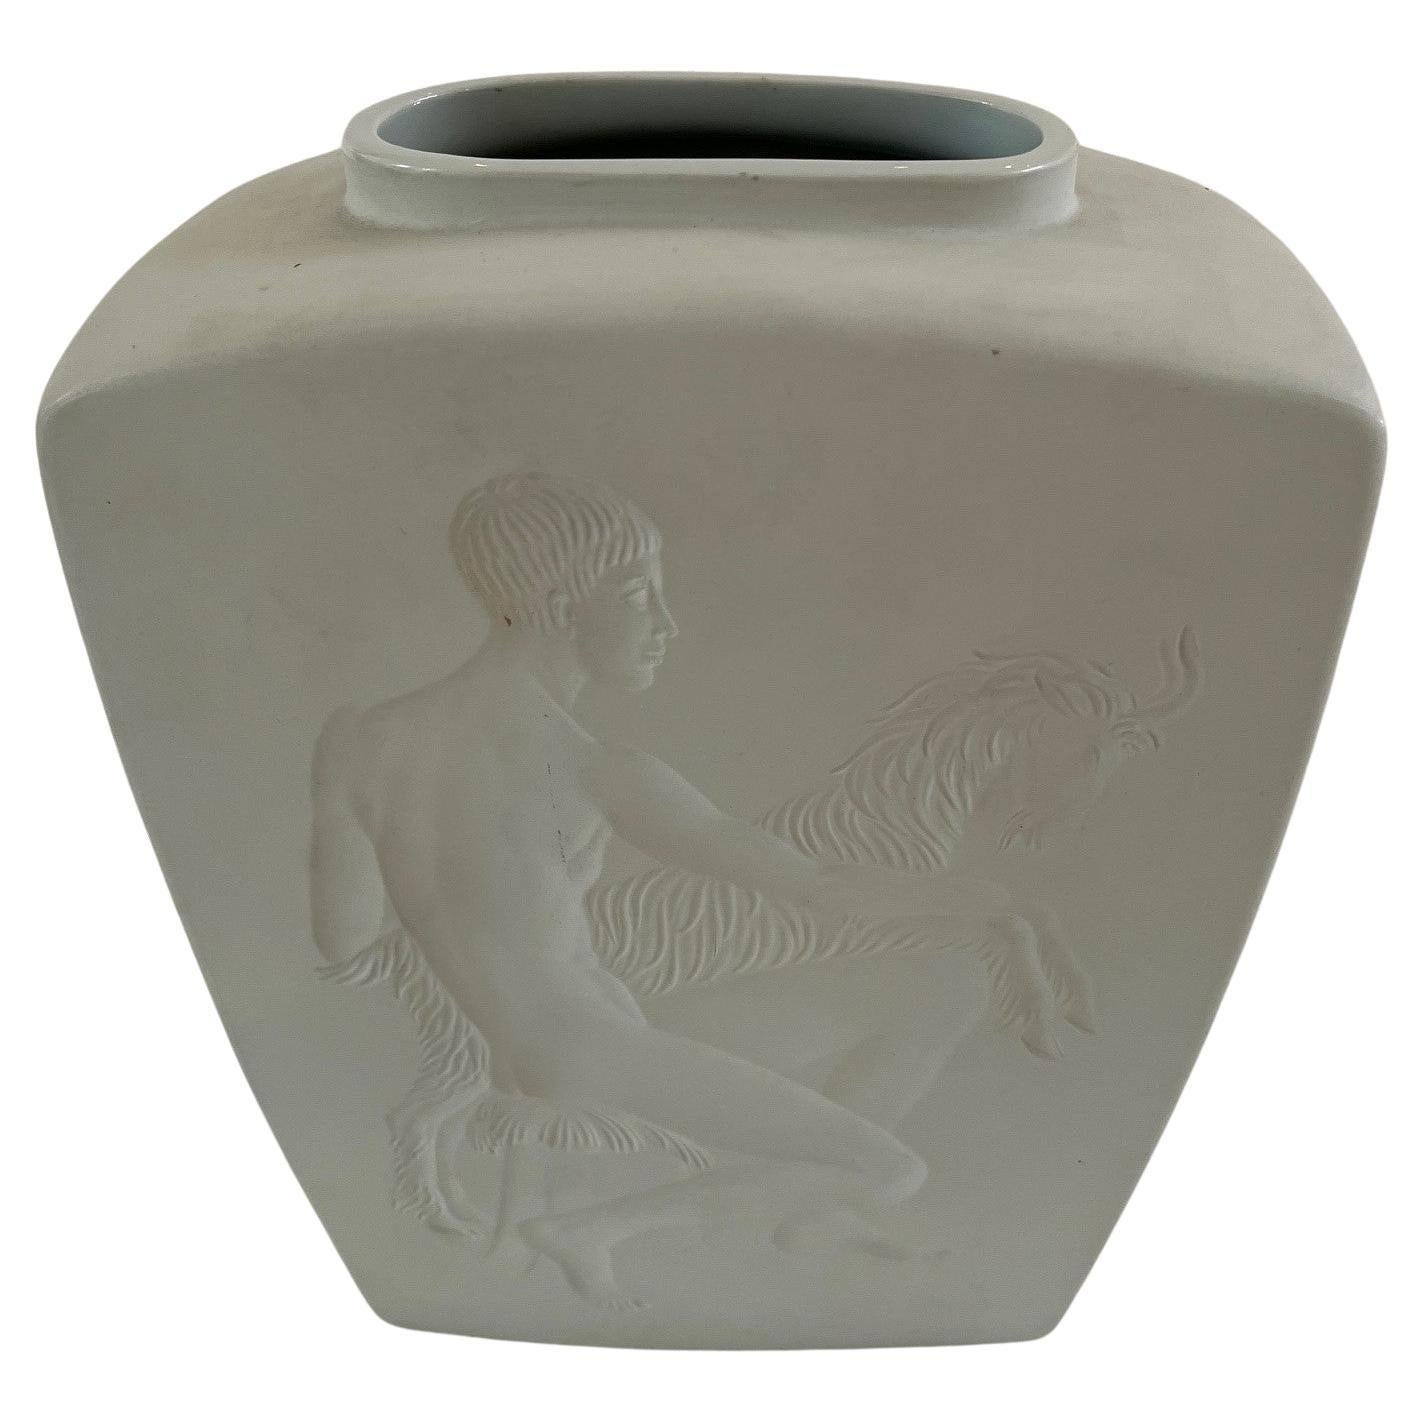 Vintage Exquisite Art Deco White Ceramic Vase by Rena Rosenthal For Sale